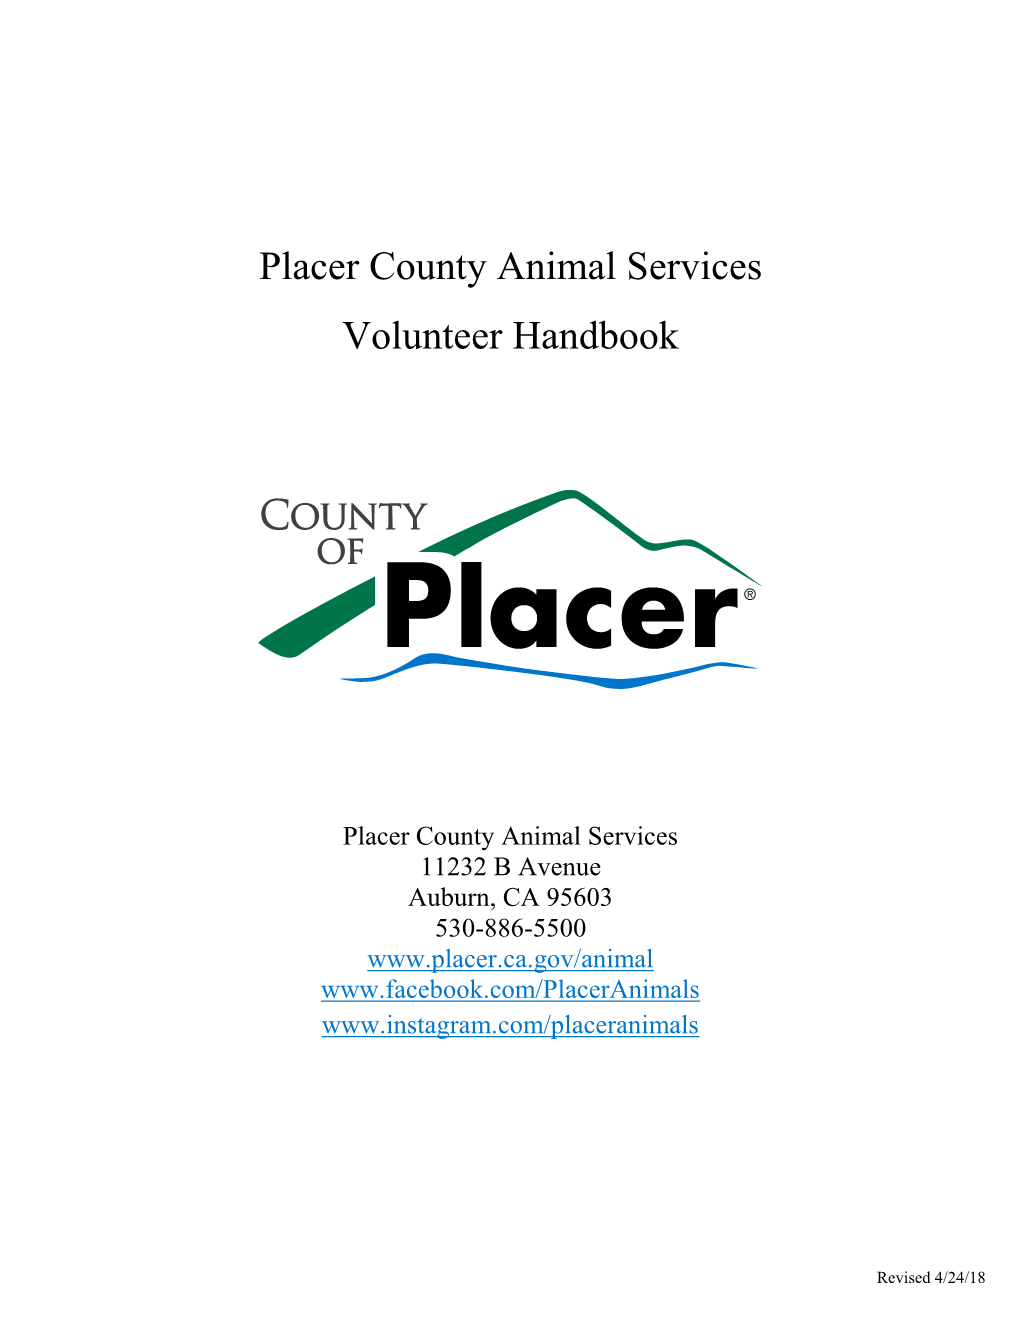 Placer County Animal Services Volunteer Handbook